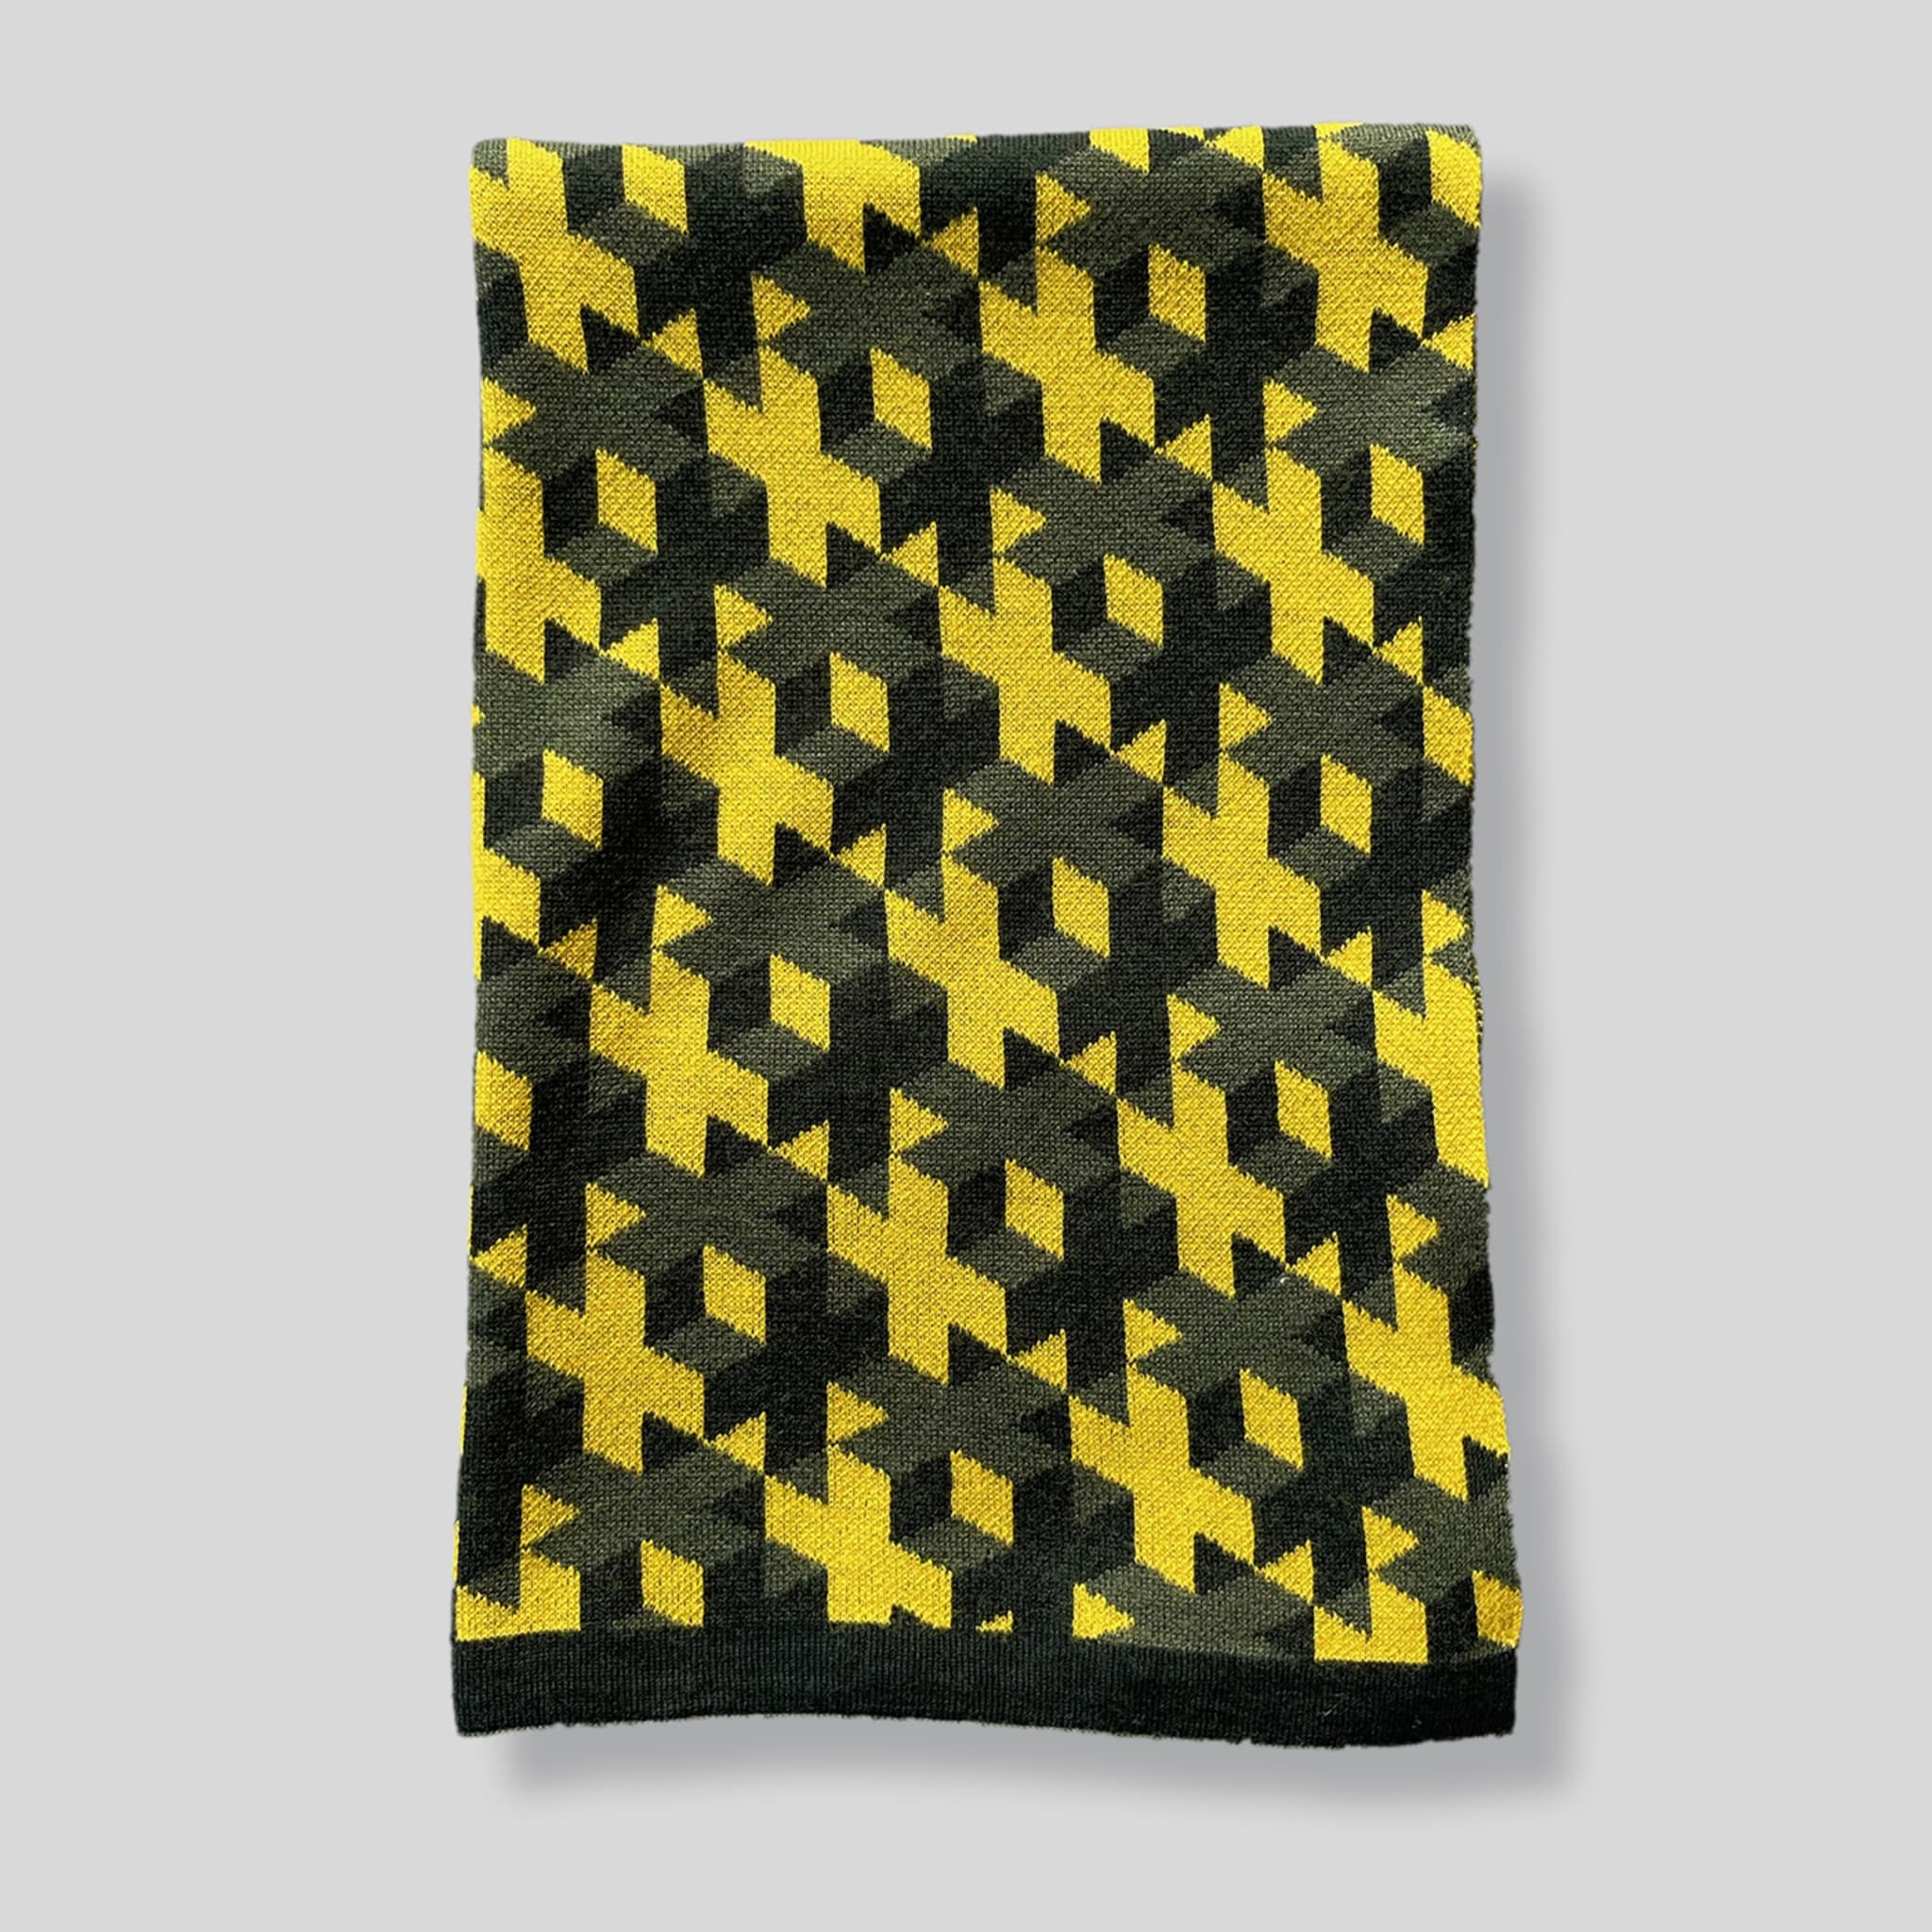 Plaid Lana 01 Patterned Yellow & Gray Blanket by Giulio Iacchetti - Alternative view 2